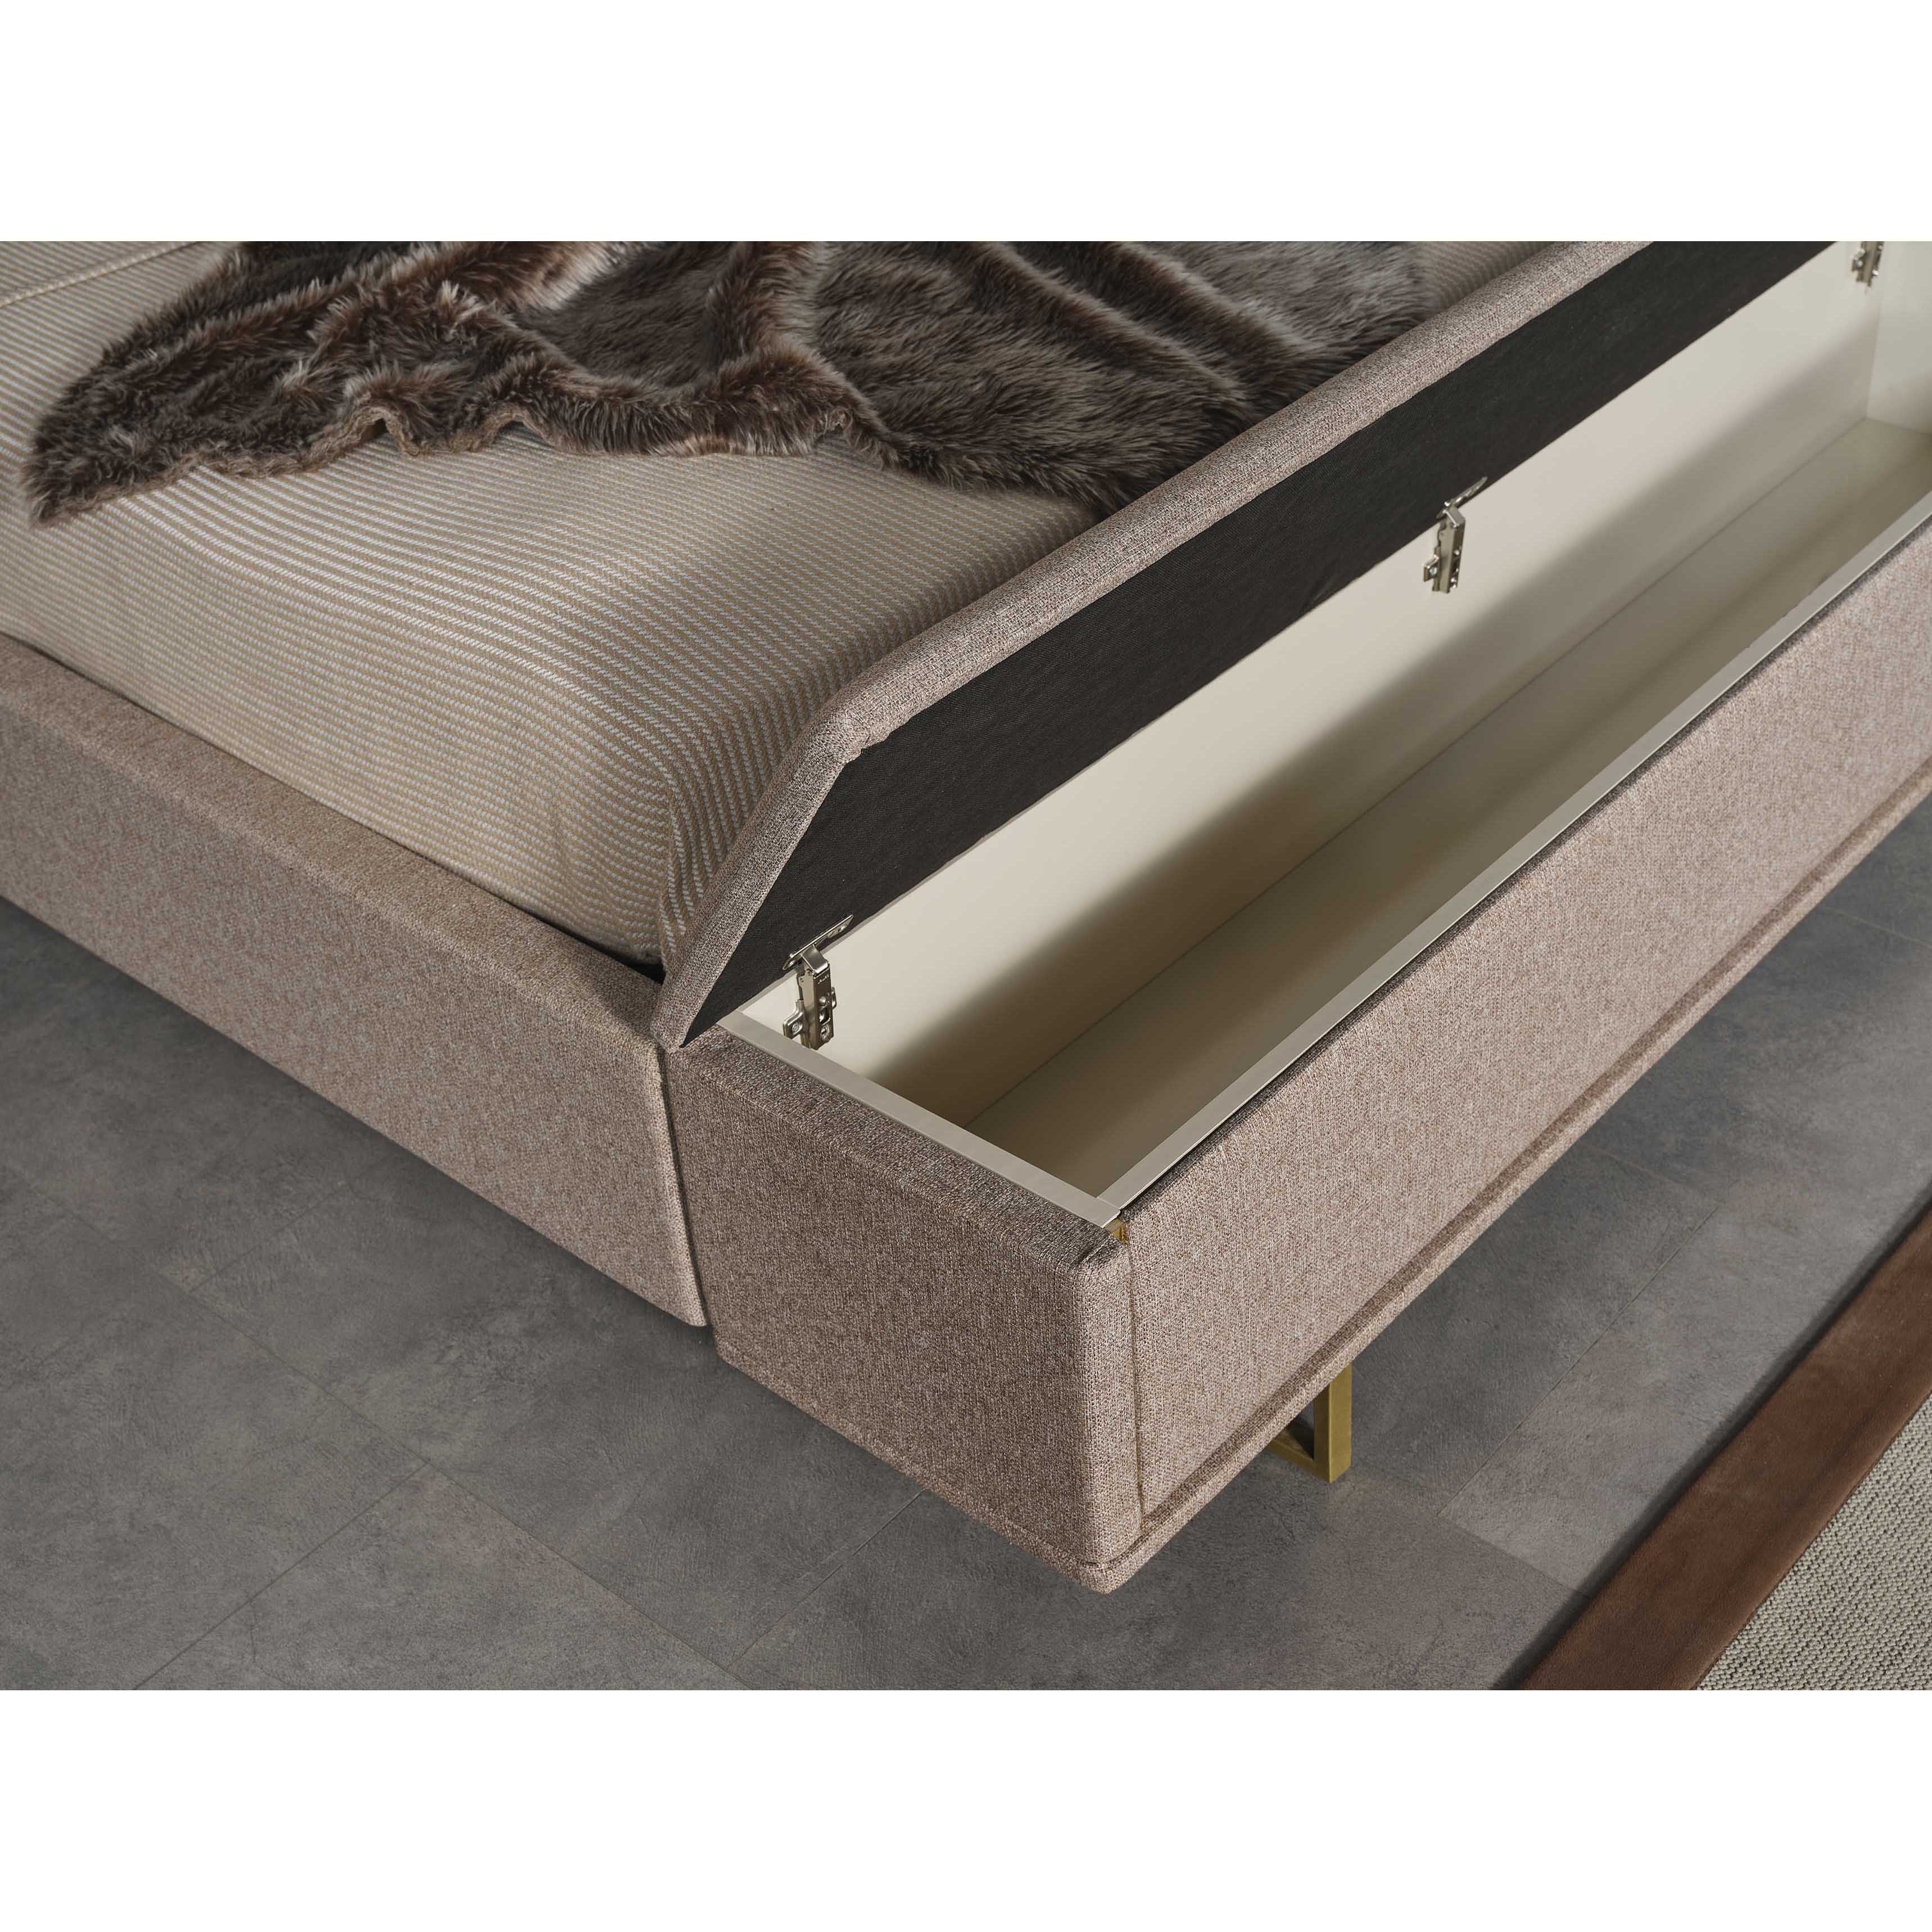 Zirve Bed With Storage 160x200 cm